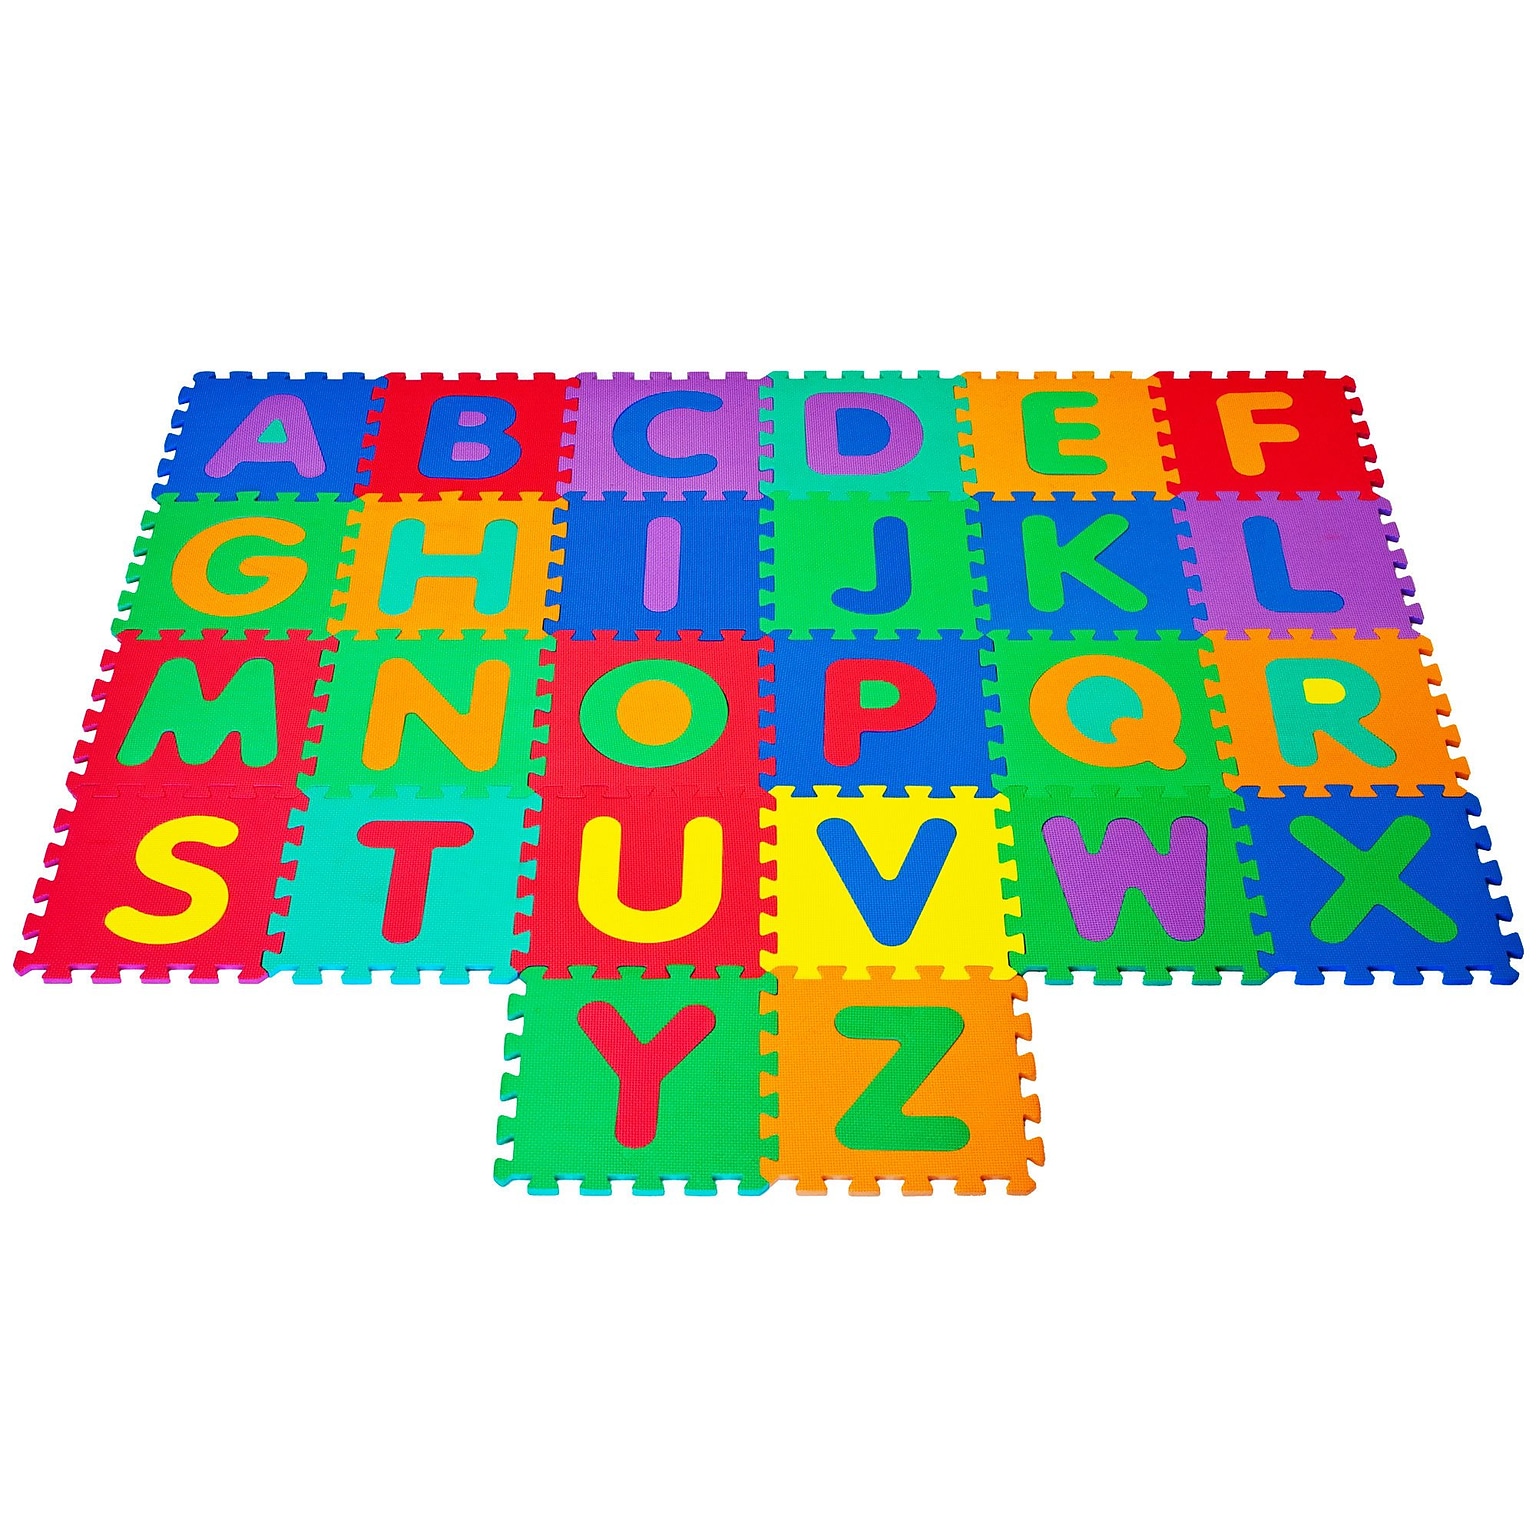 Trademark Games™ Floor Alphabet Puzzles Mat For Kids